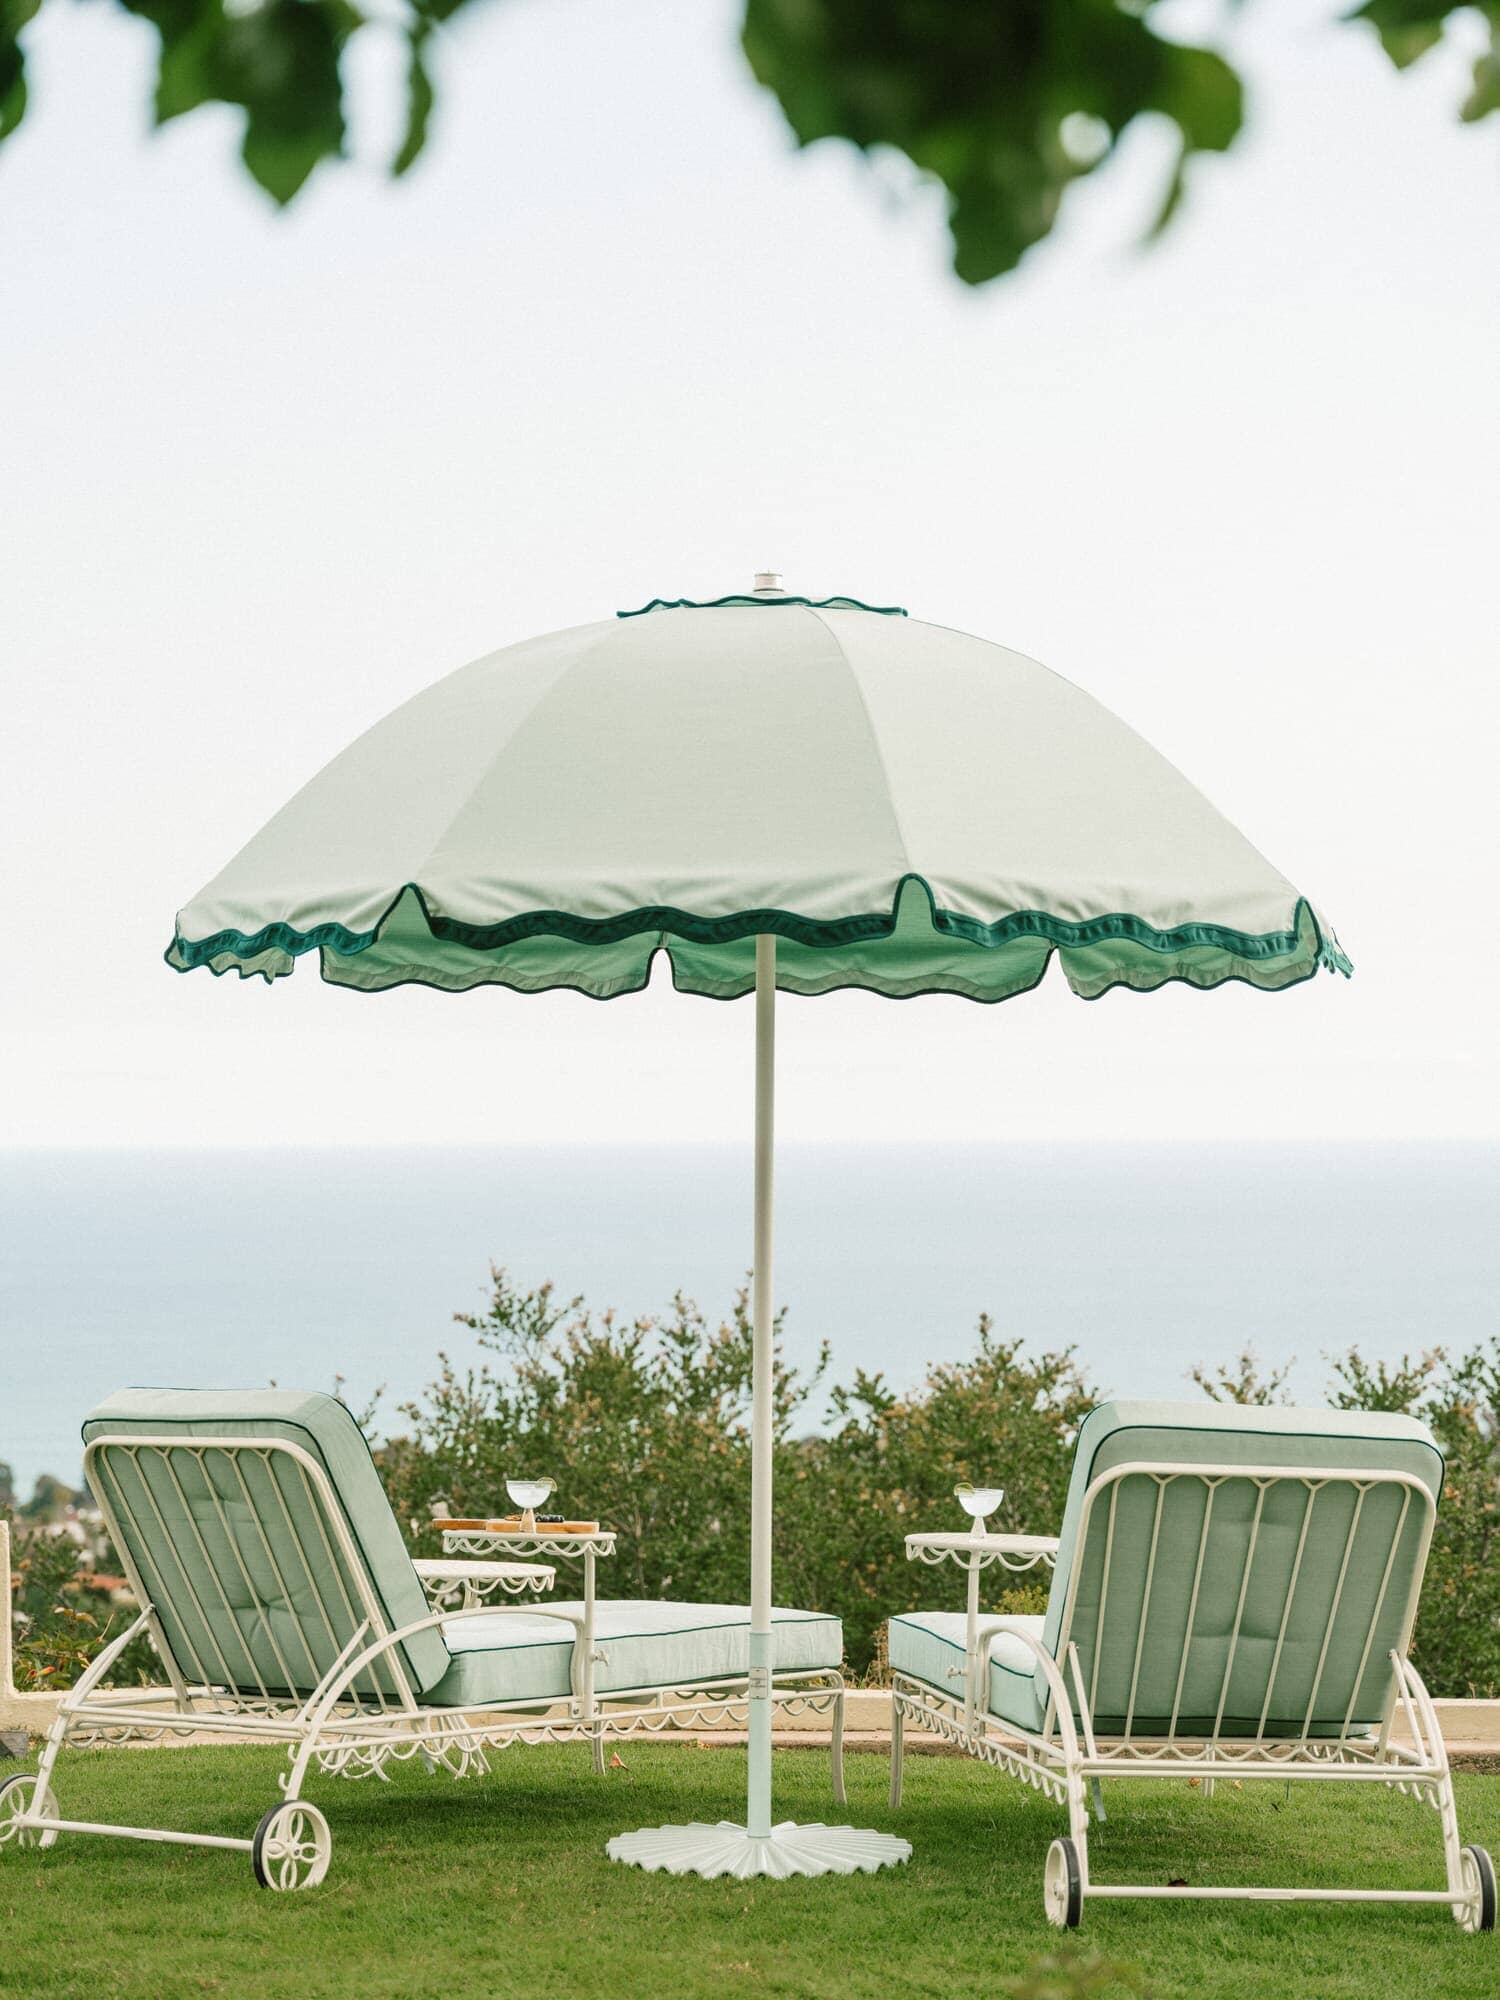 The Patio Umbrella - Rivie Green Patio Umbrella Business & Pleasure Co Aus 